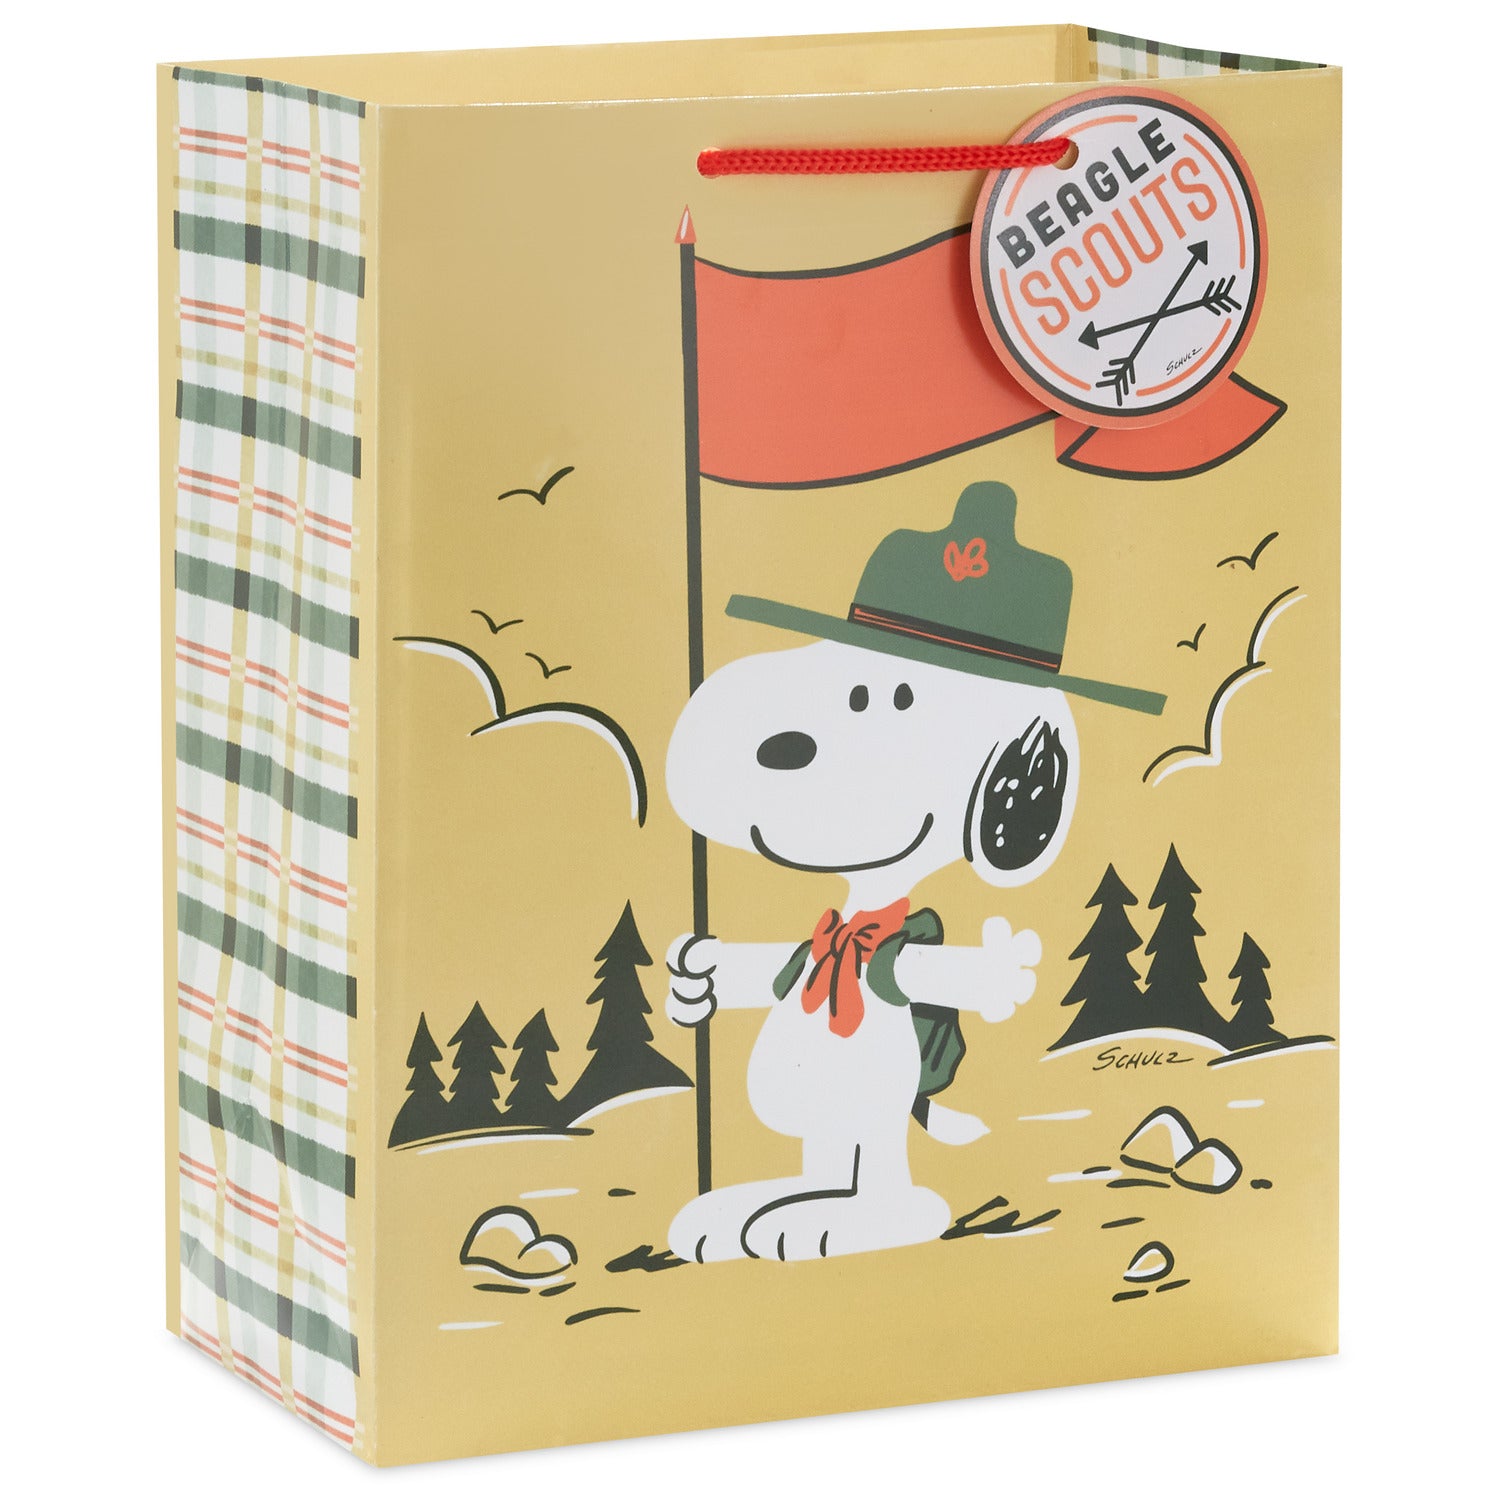 PEANUTS Beagle Scouts SNOOPY MEDIUM Gift BAG 9.6